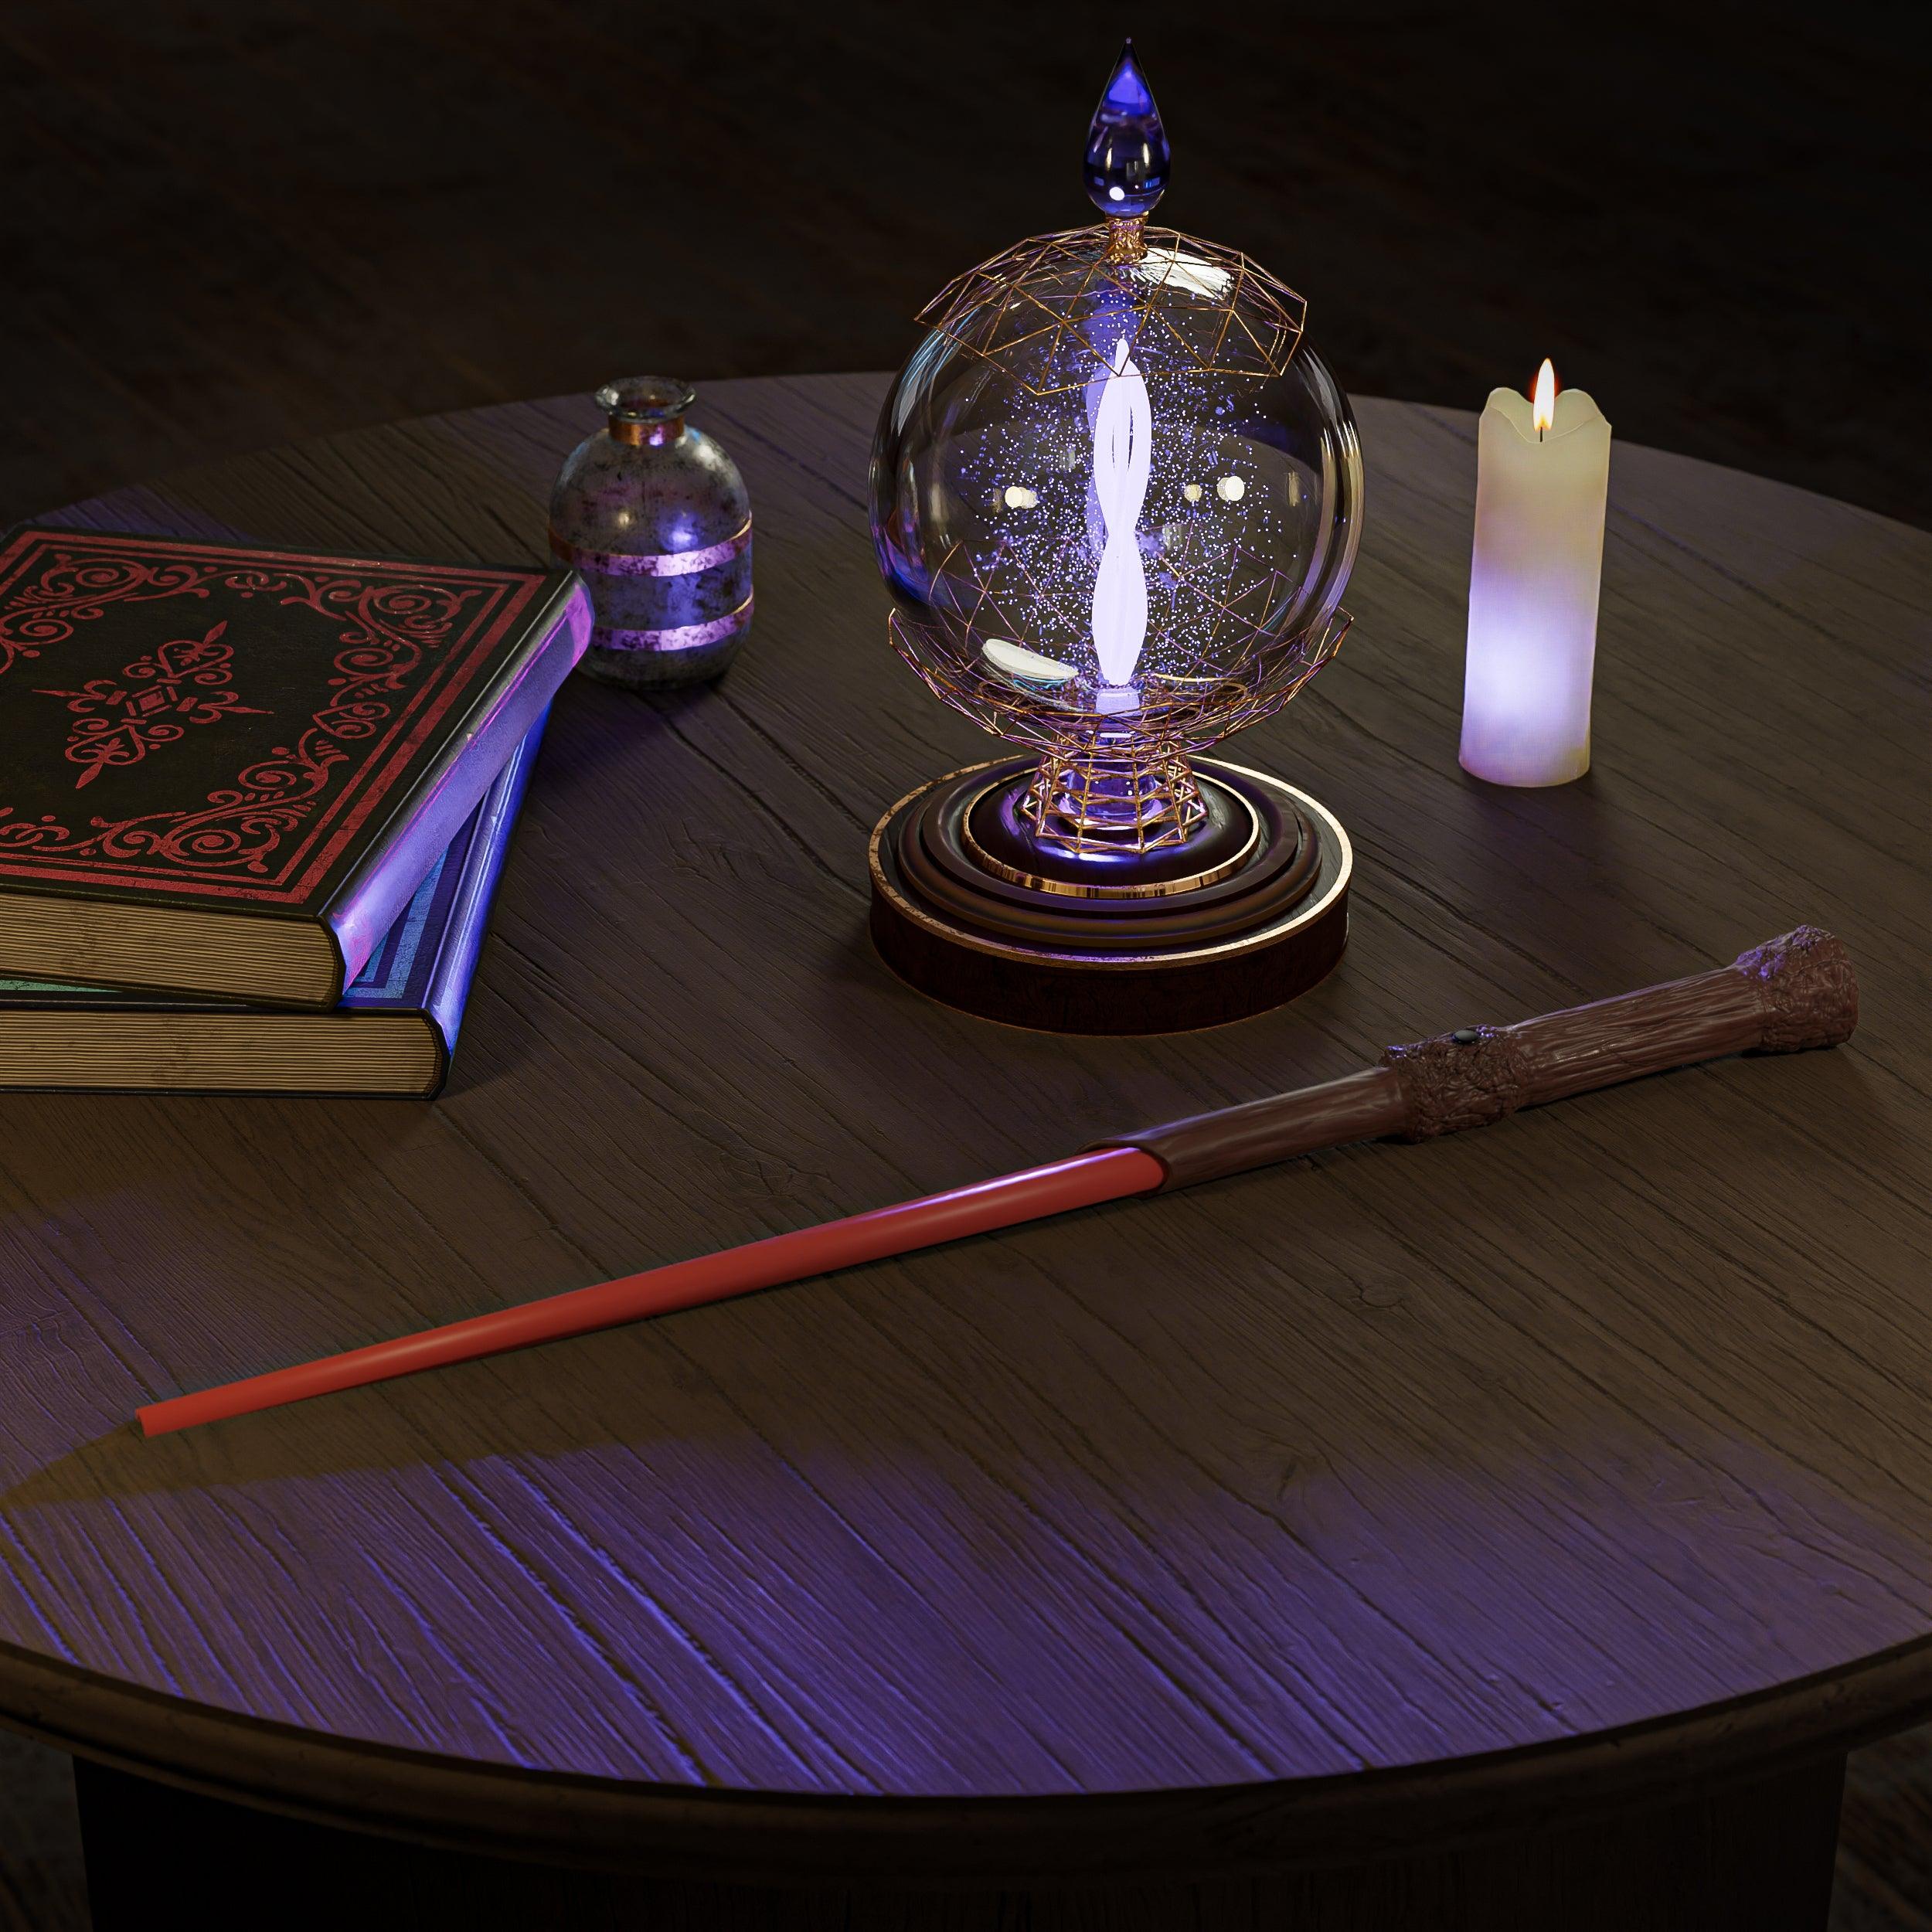 Incendio Potter Fire Magic Wand - Incendio